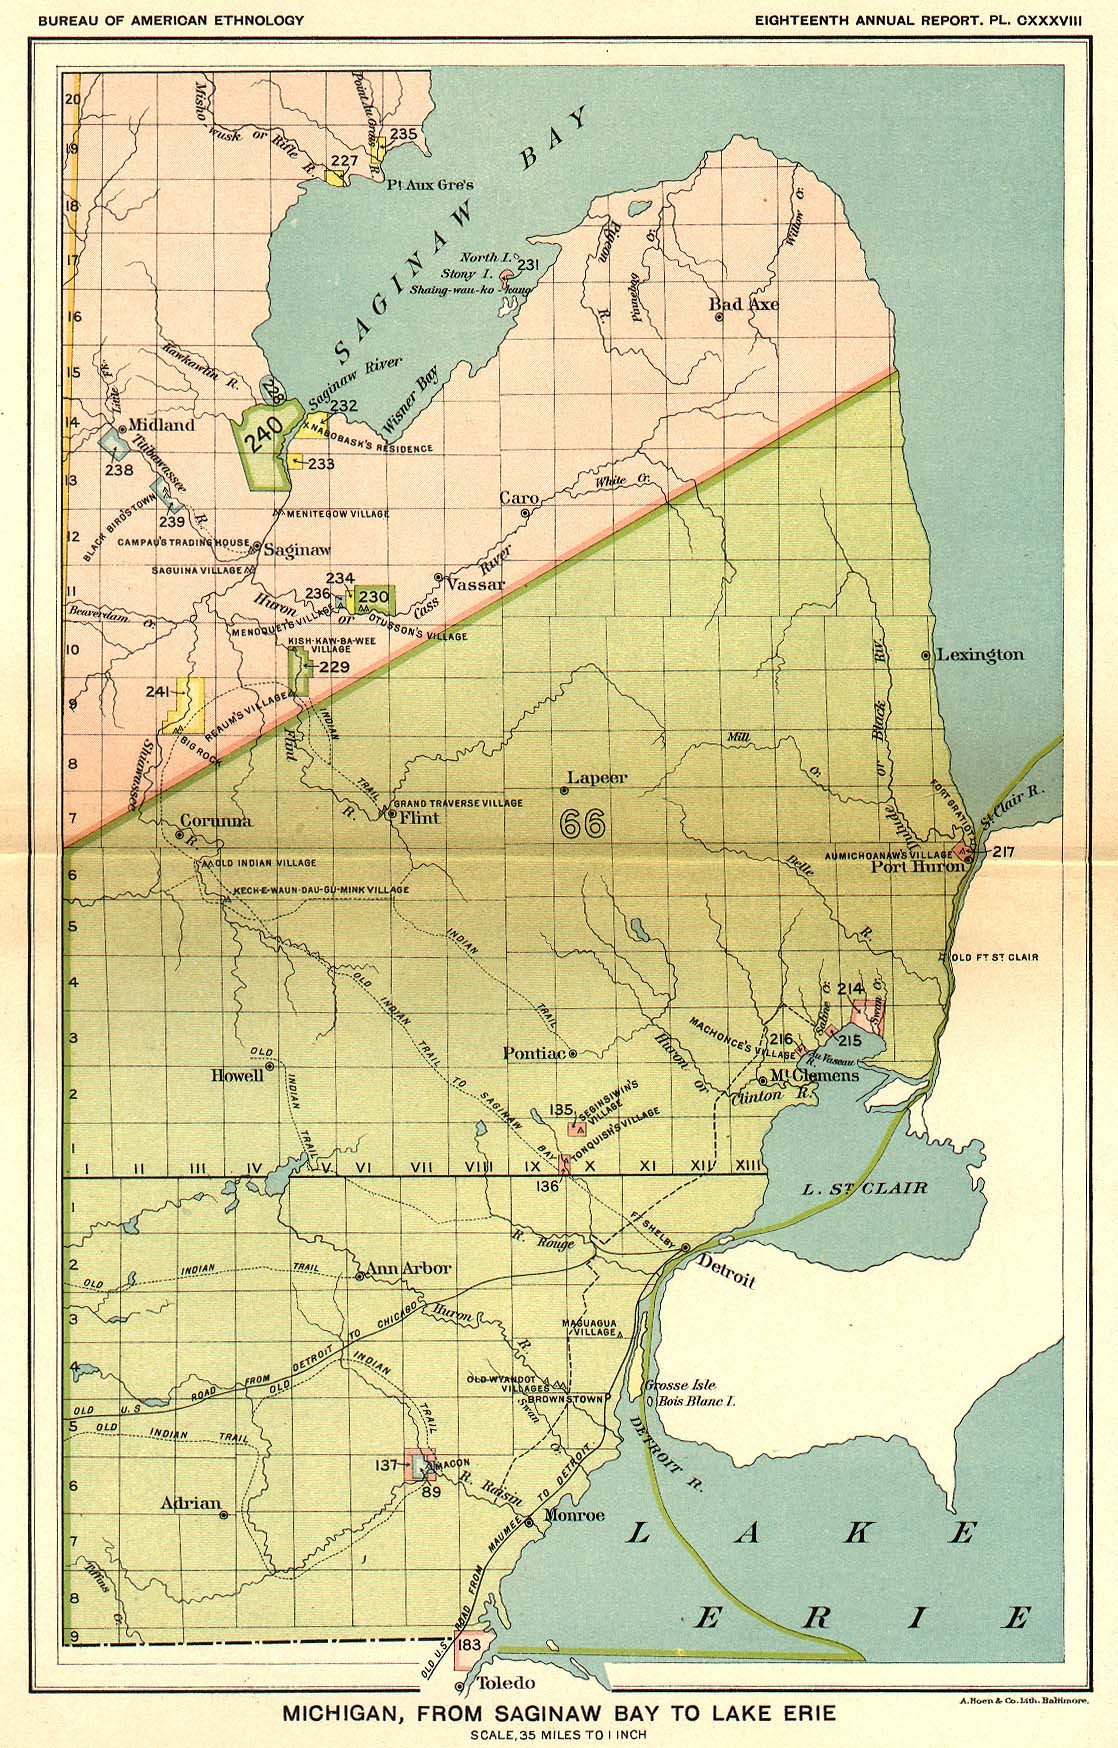  Michigan, From Saginaw Bay to Lake Erie, 
Map 31